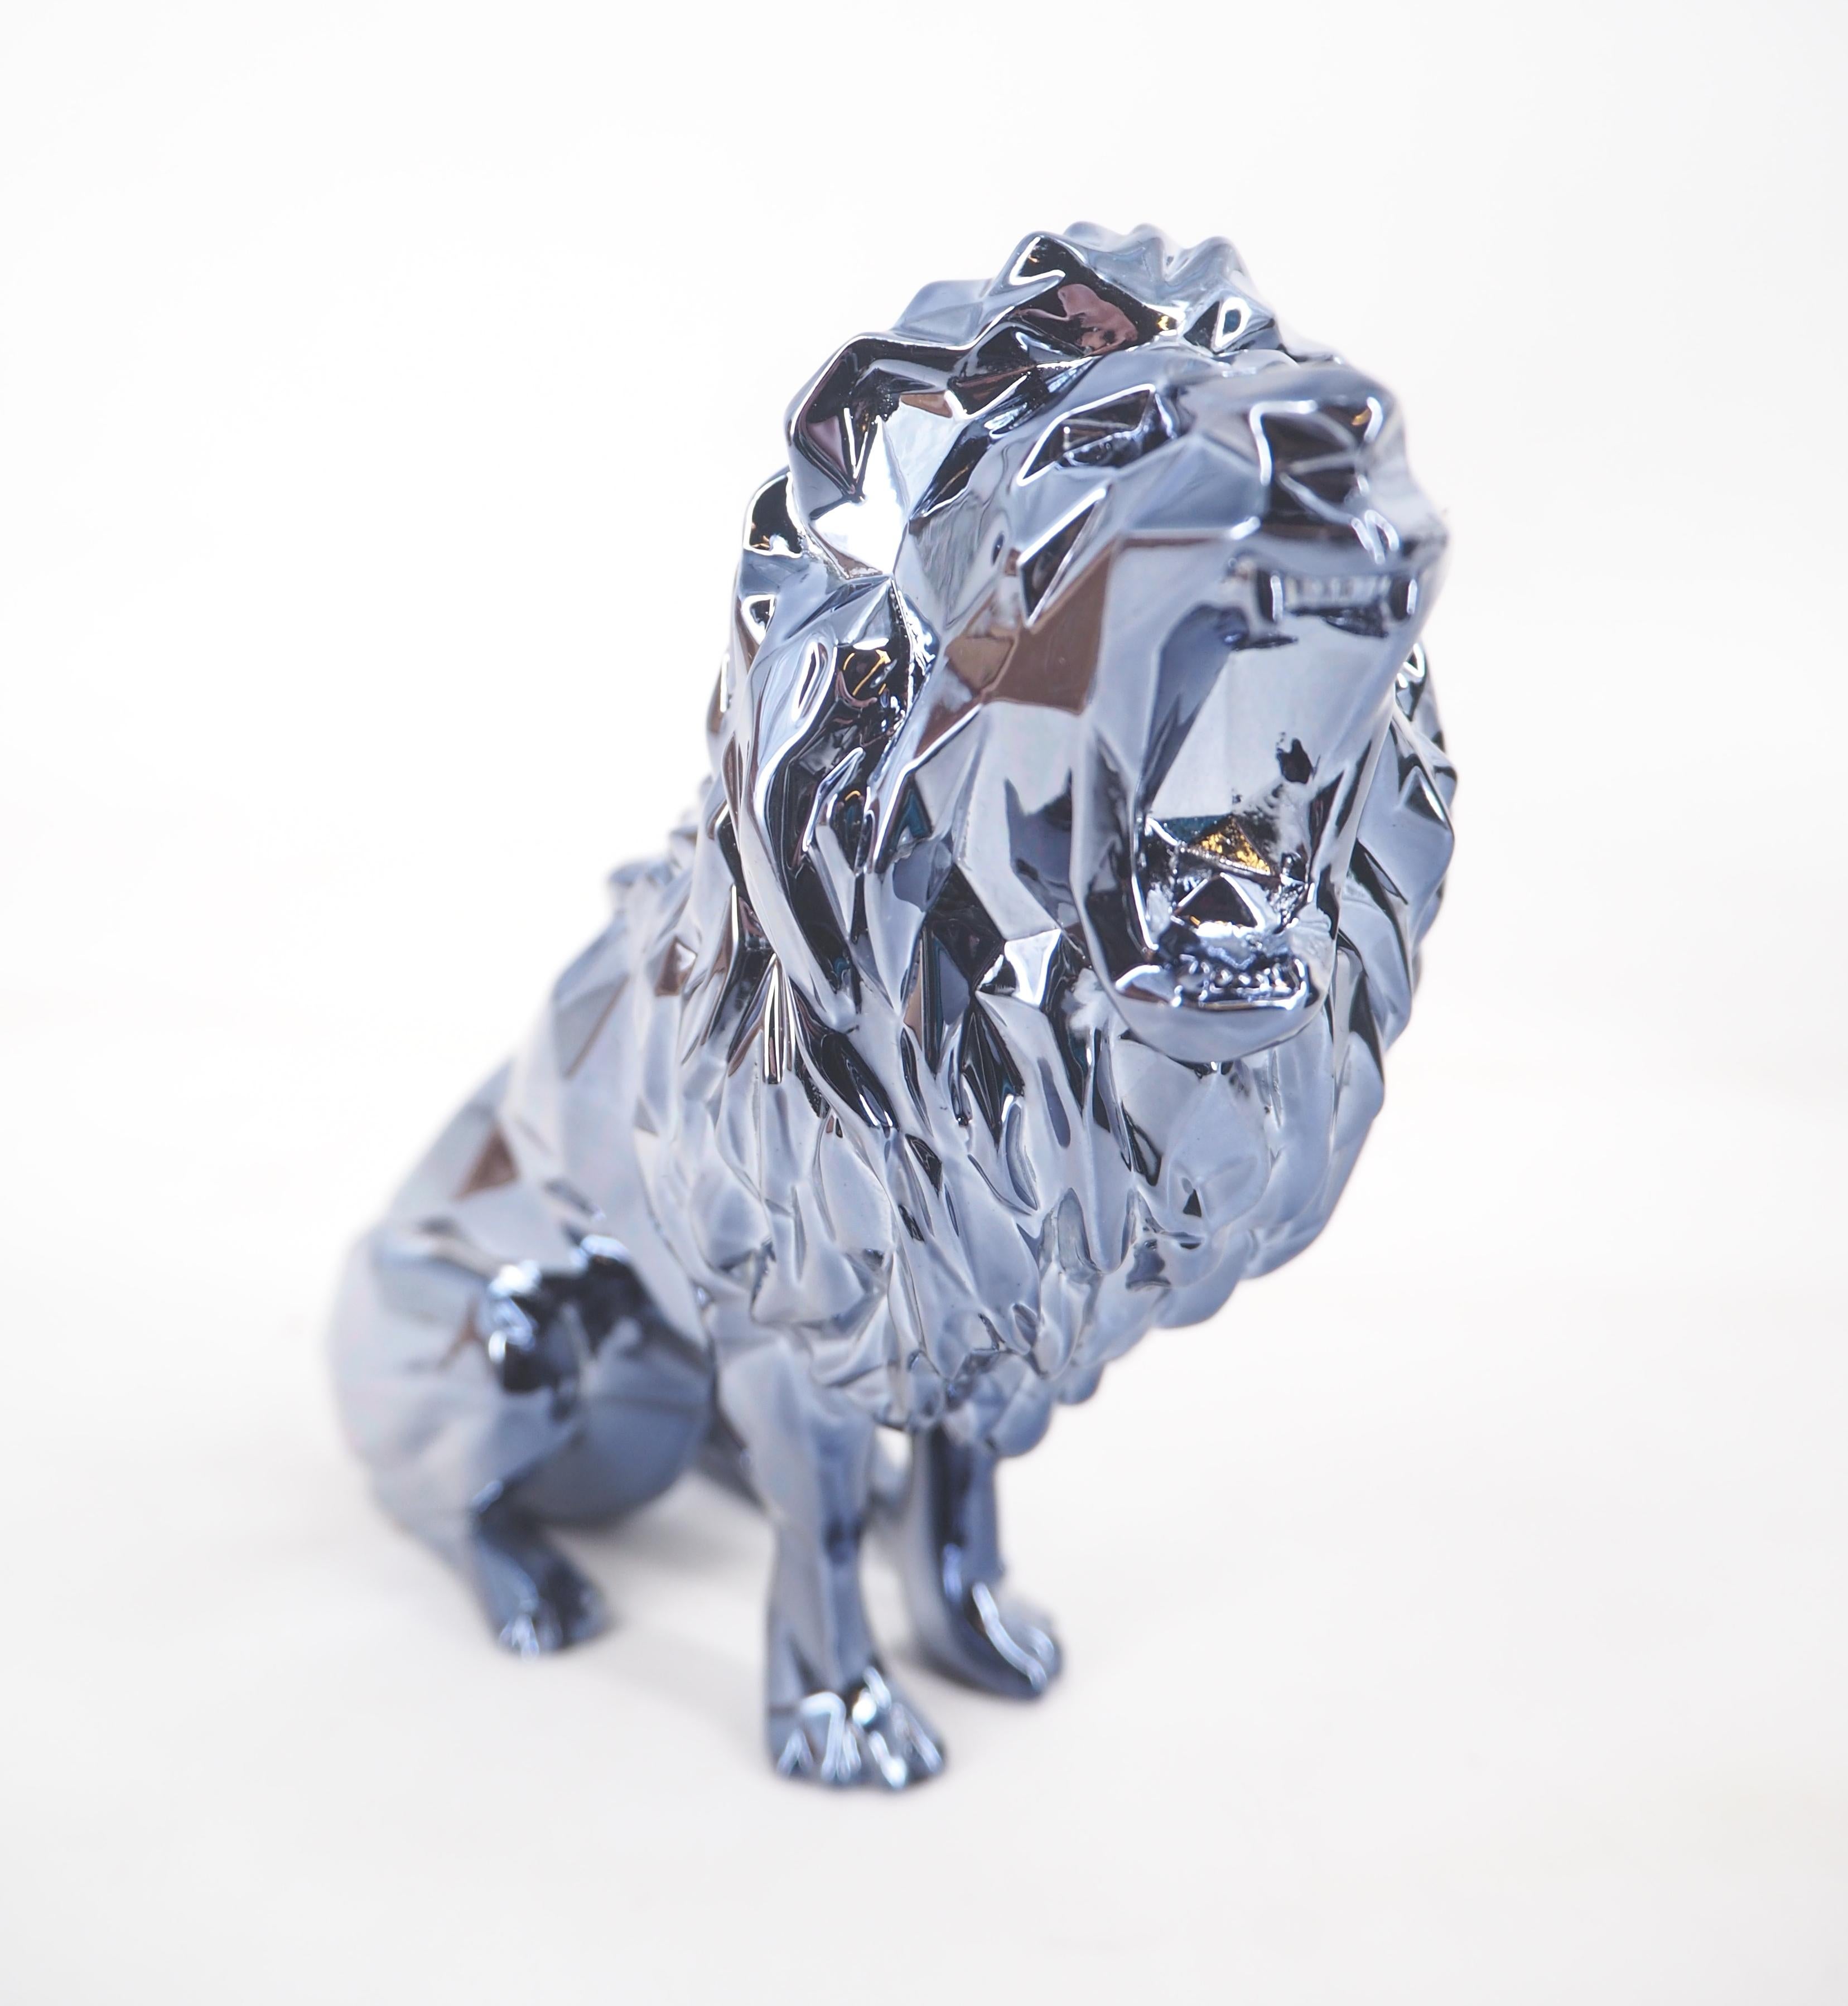 Richard Orlinski Figurative Sculpture - Roaring Lion Spirit (Petrol edition) - Sculpture in original box with artist coa